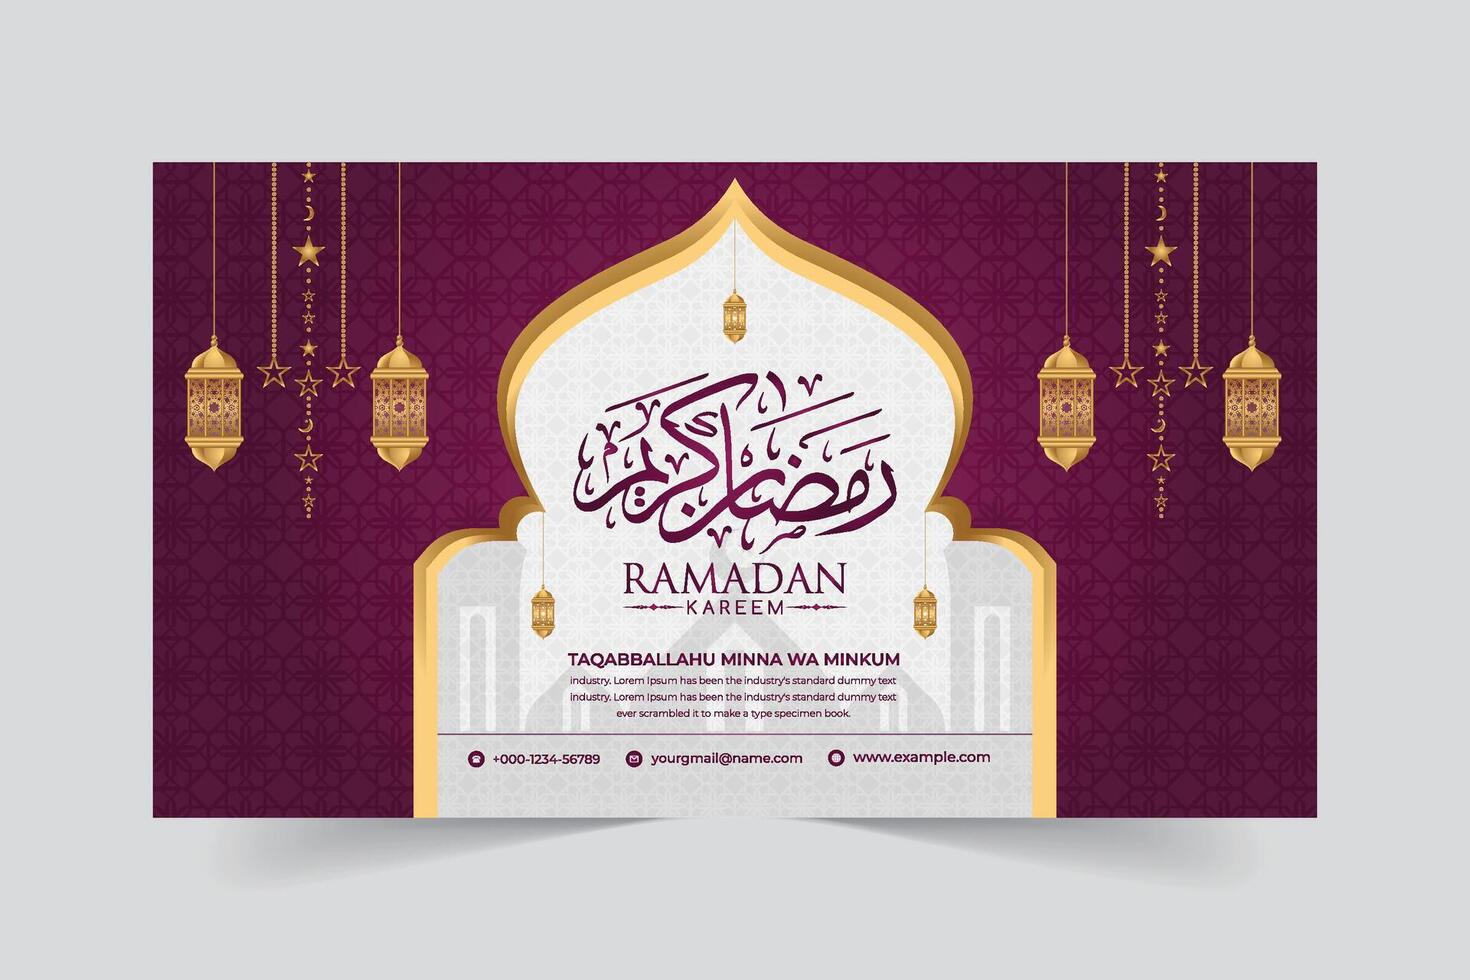 Ramadan kareem Islamitisch festival religieus web banier sjabloon vector